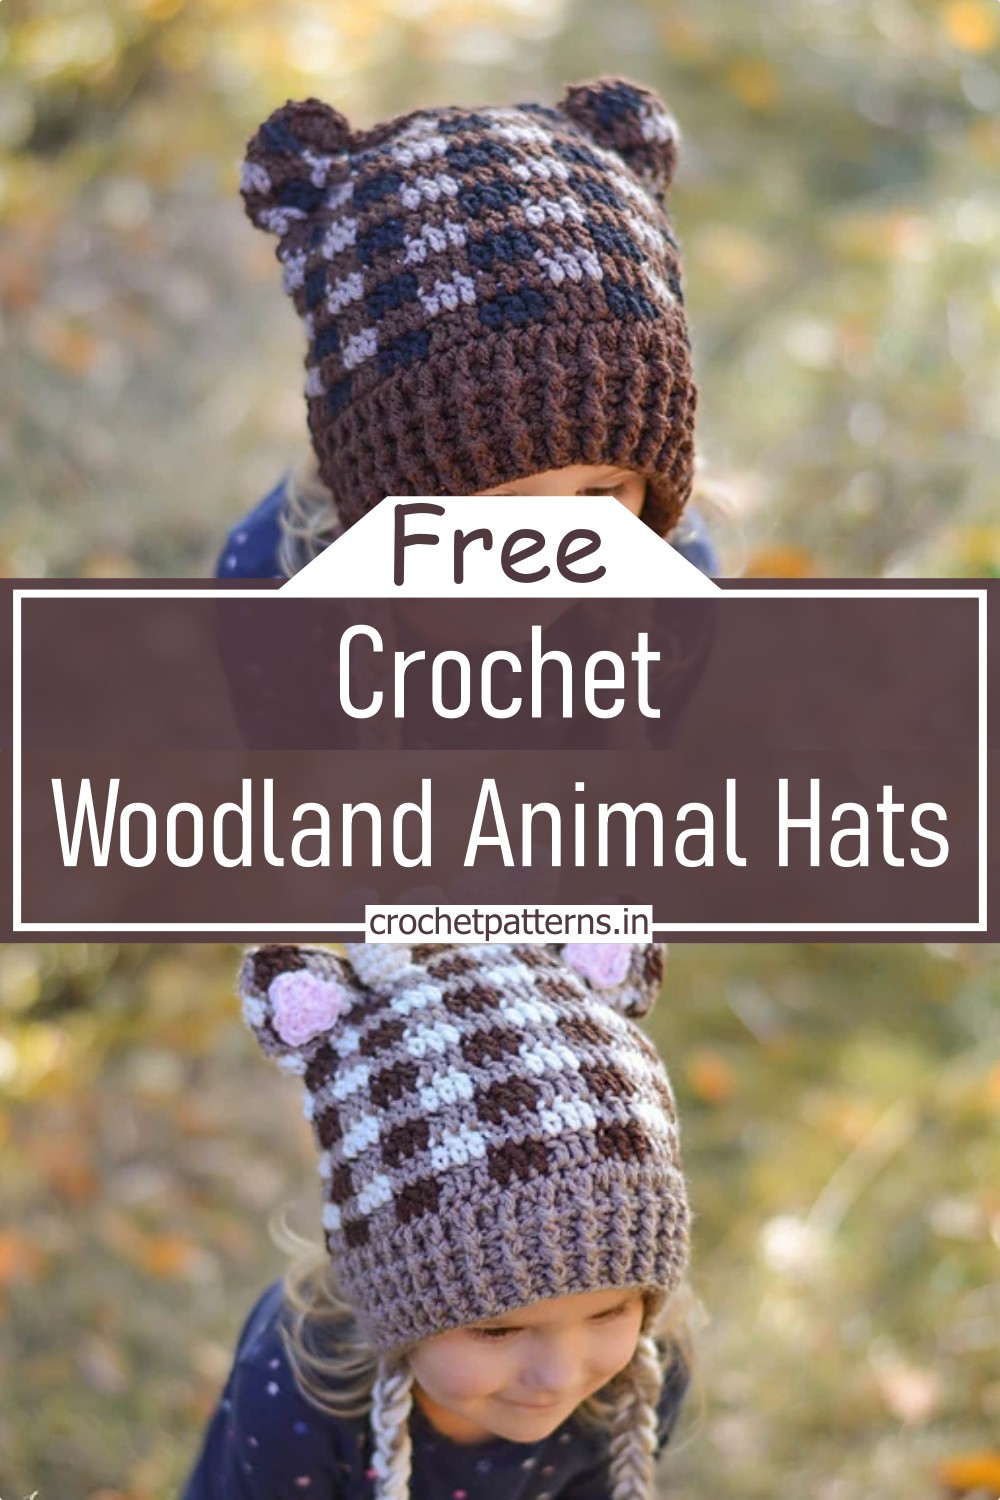 Woodland Animal Hats